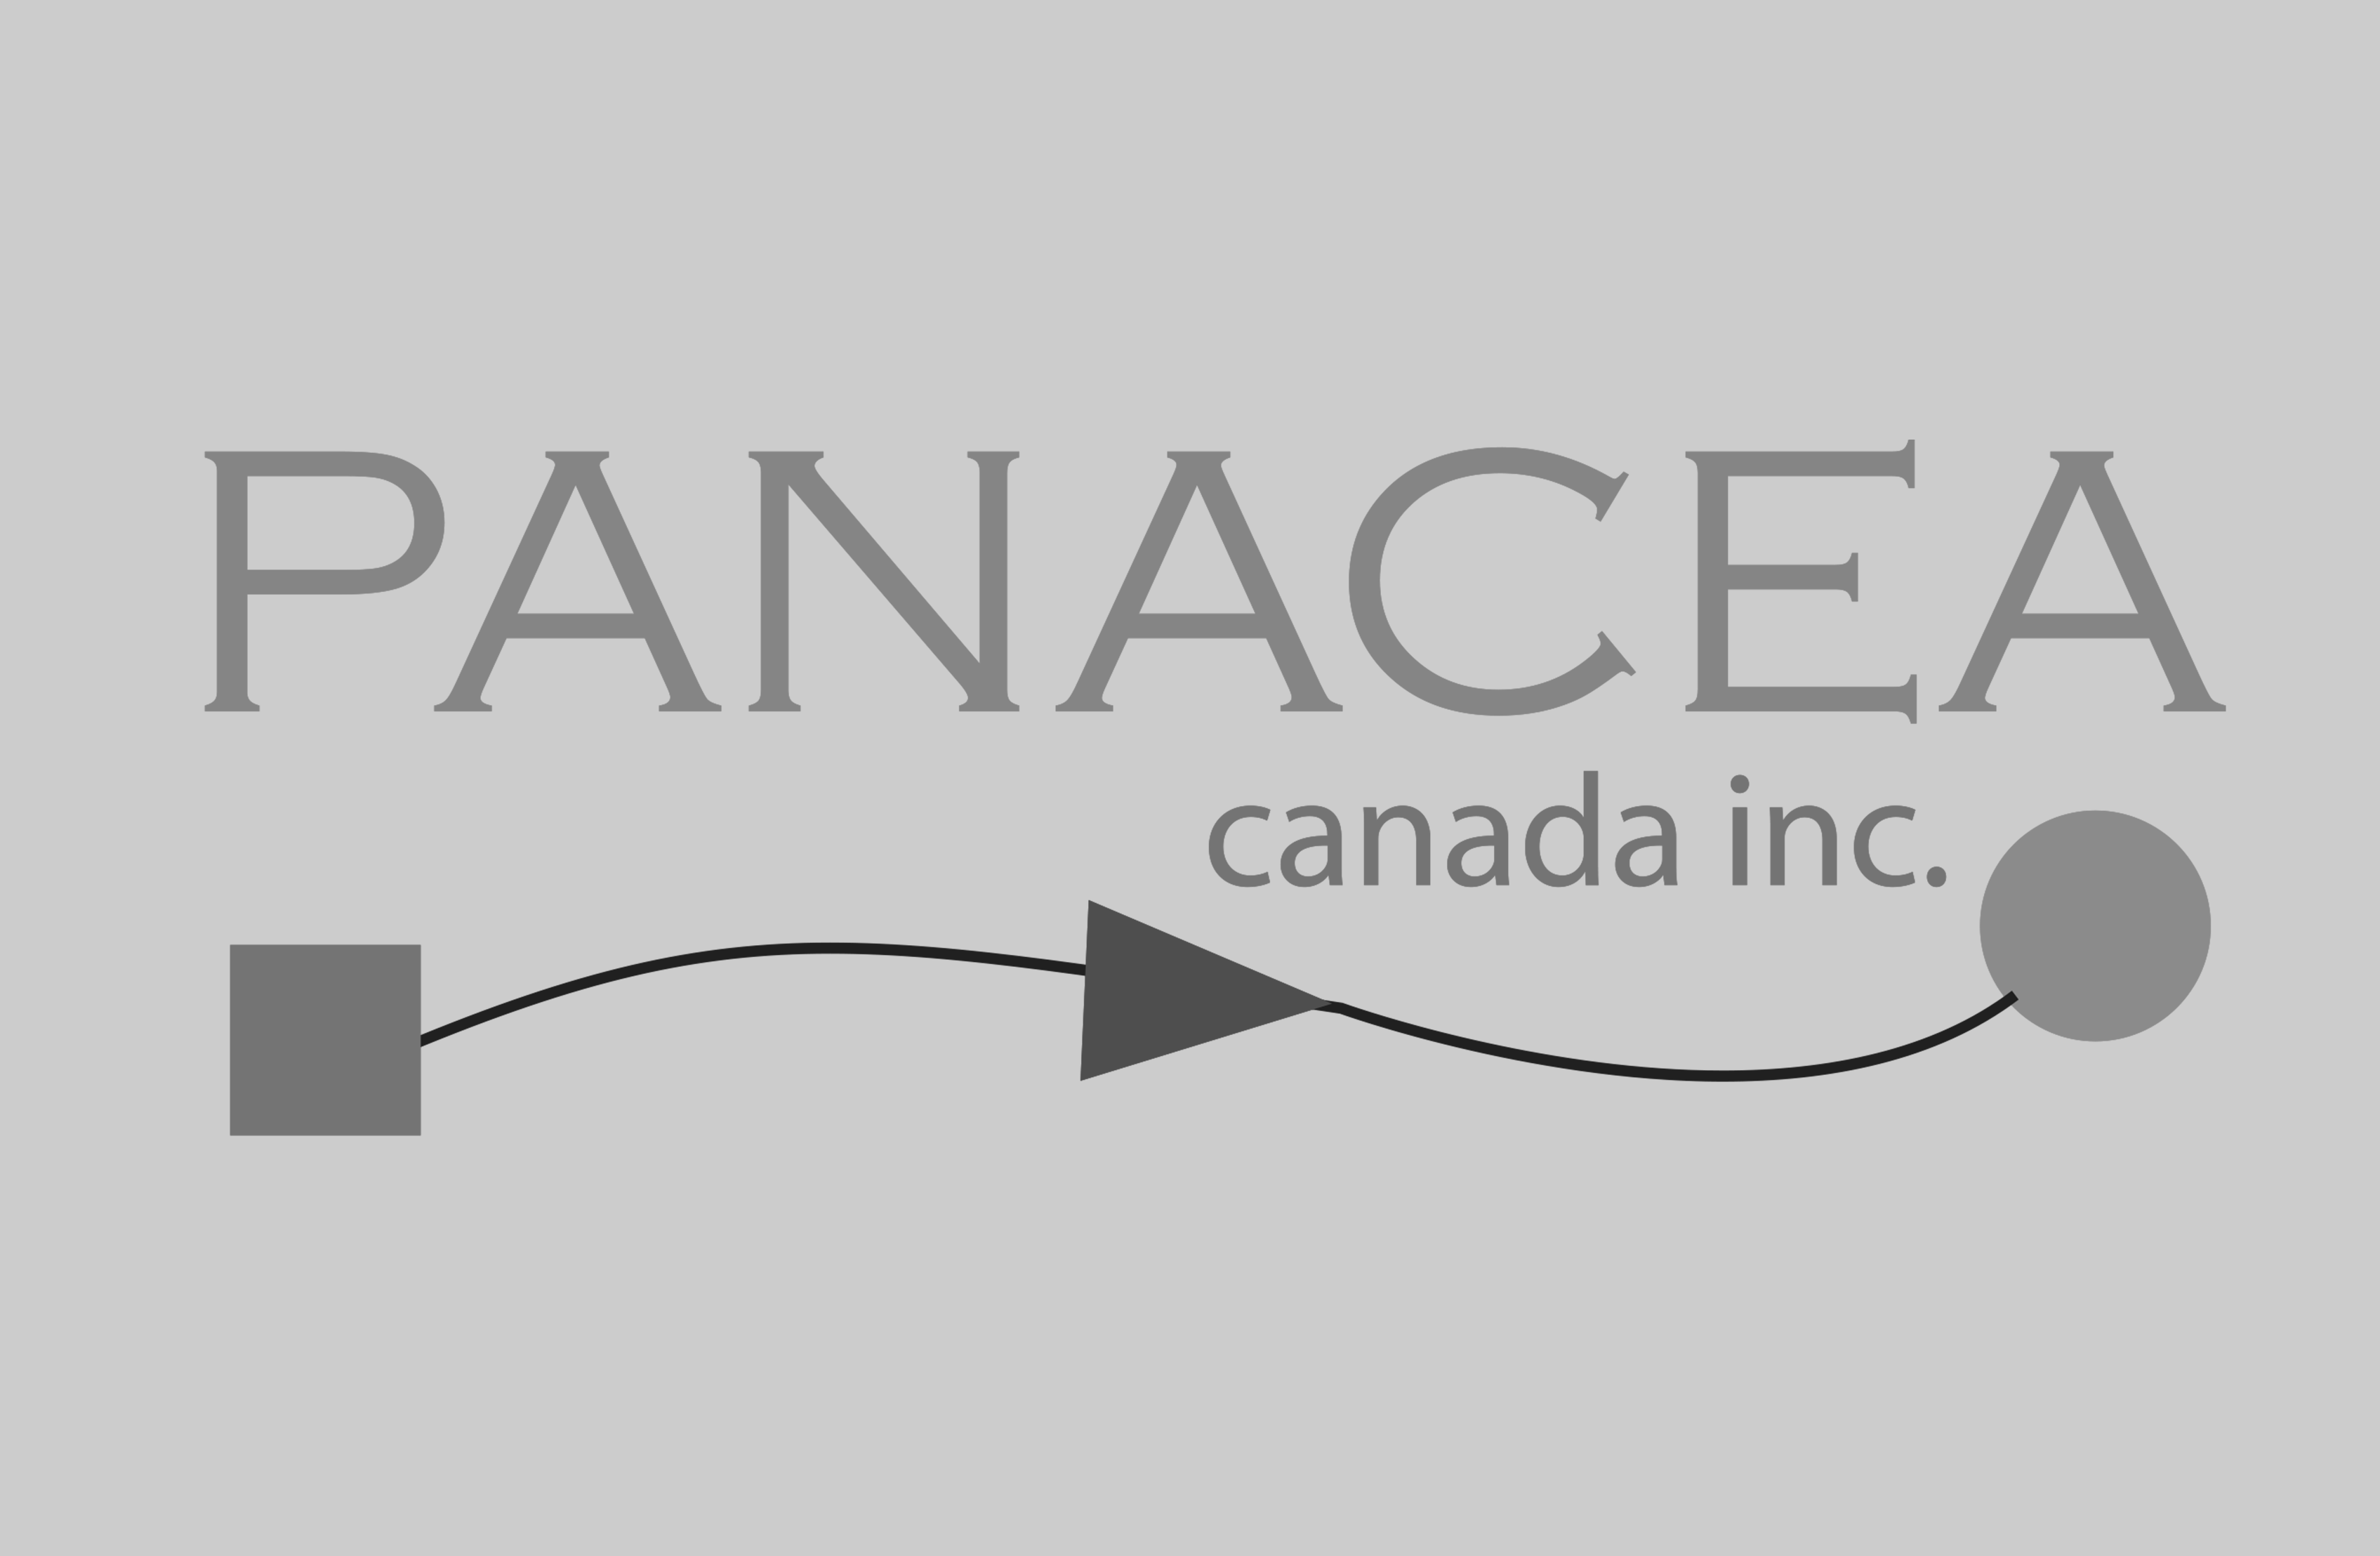 Panacea Canada Inc old logo